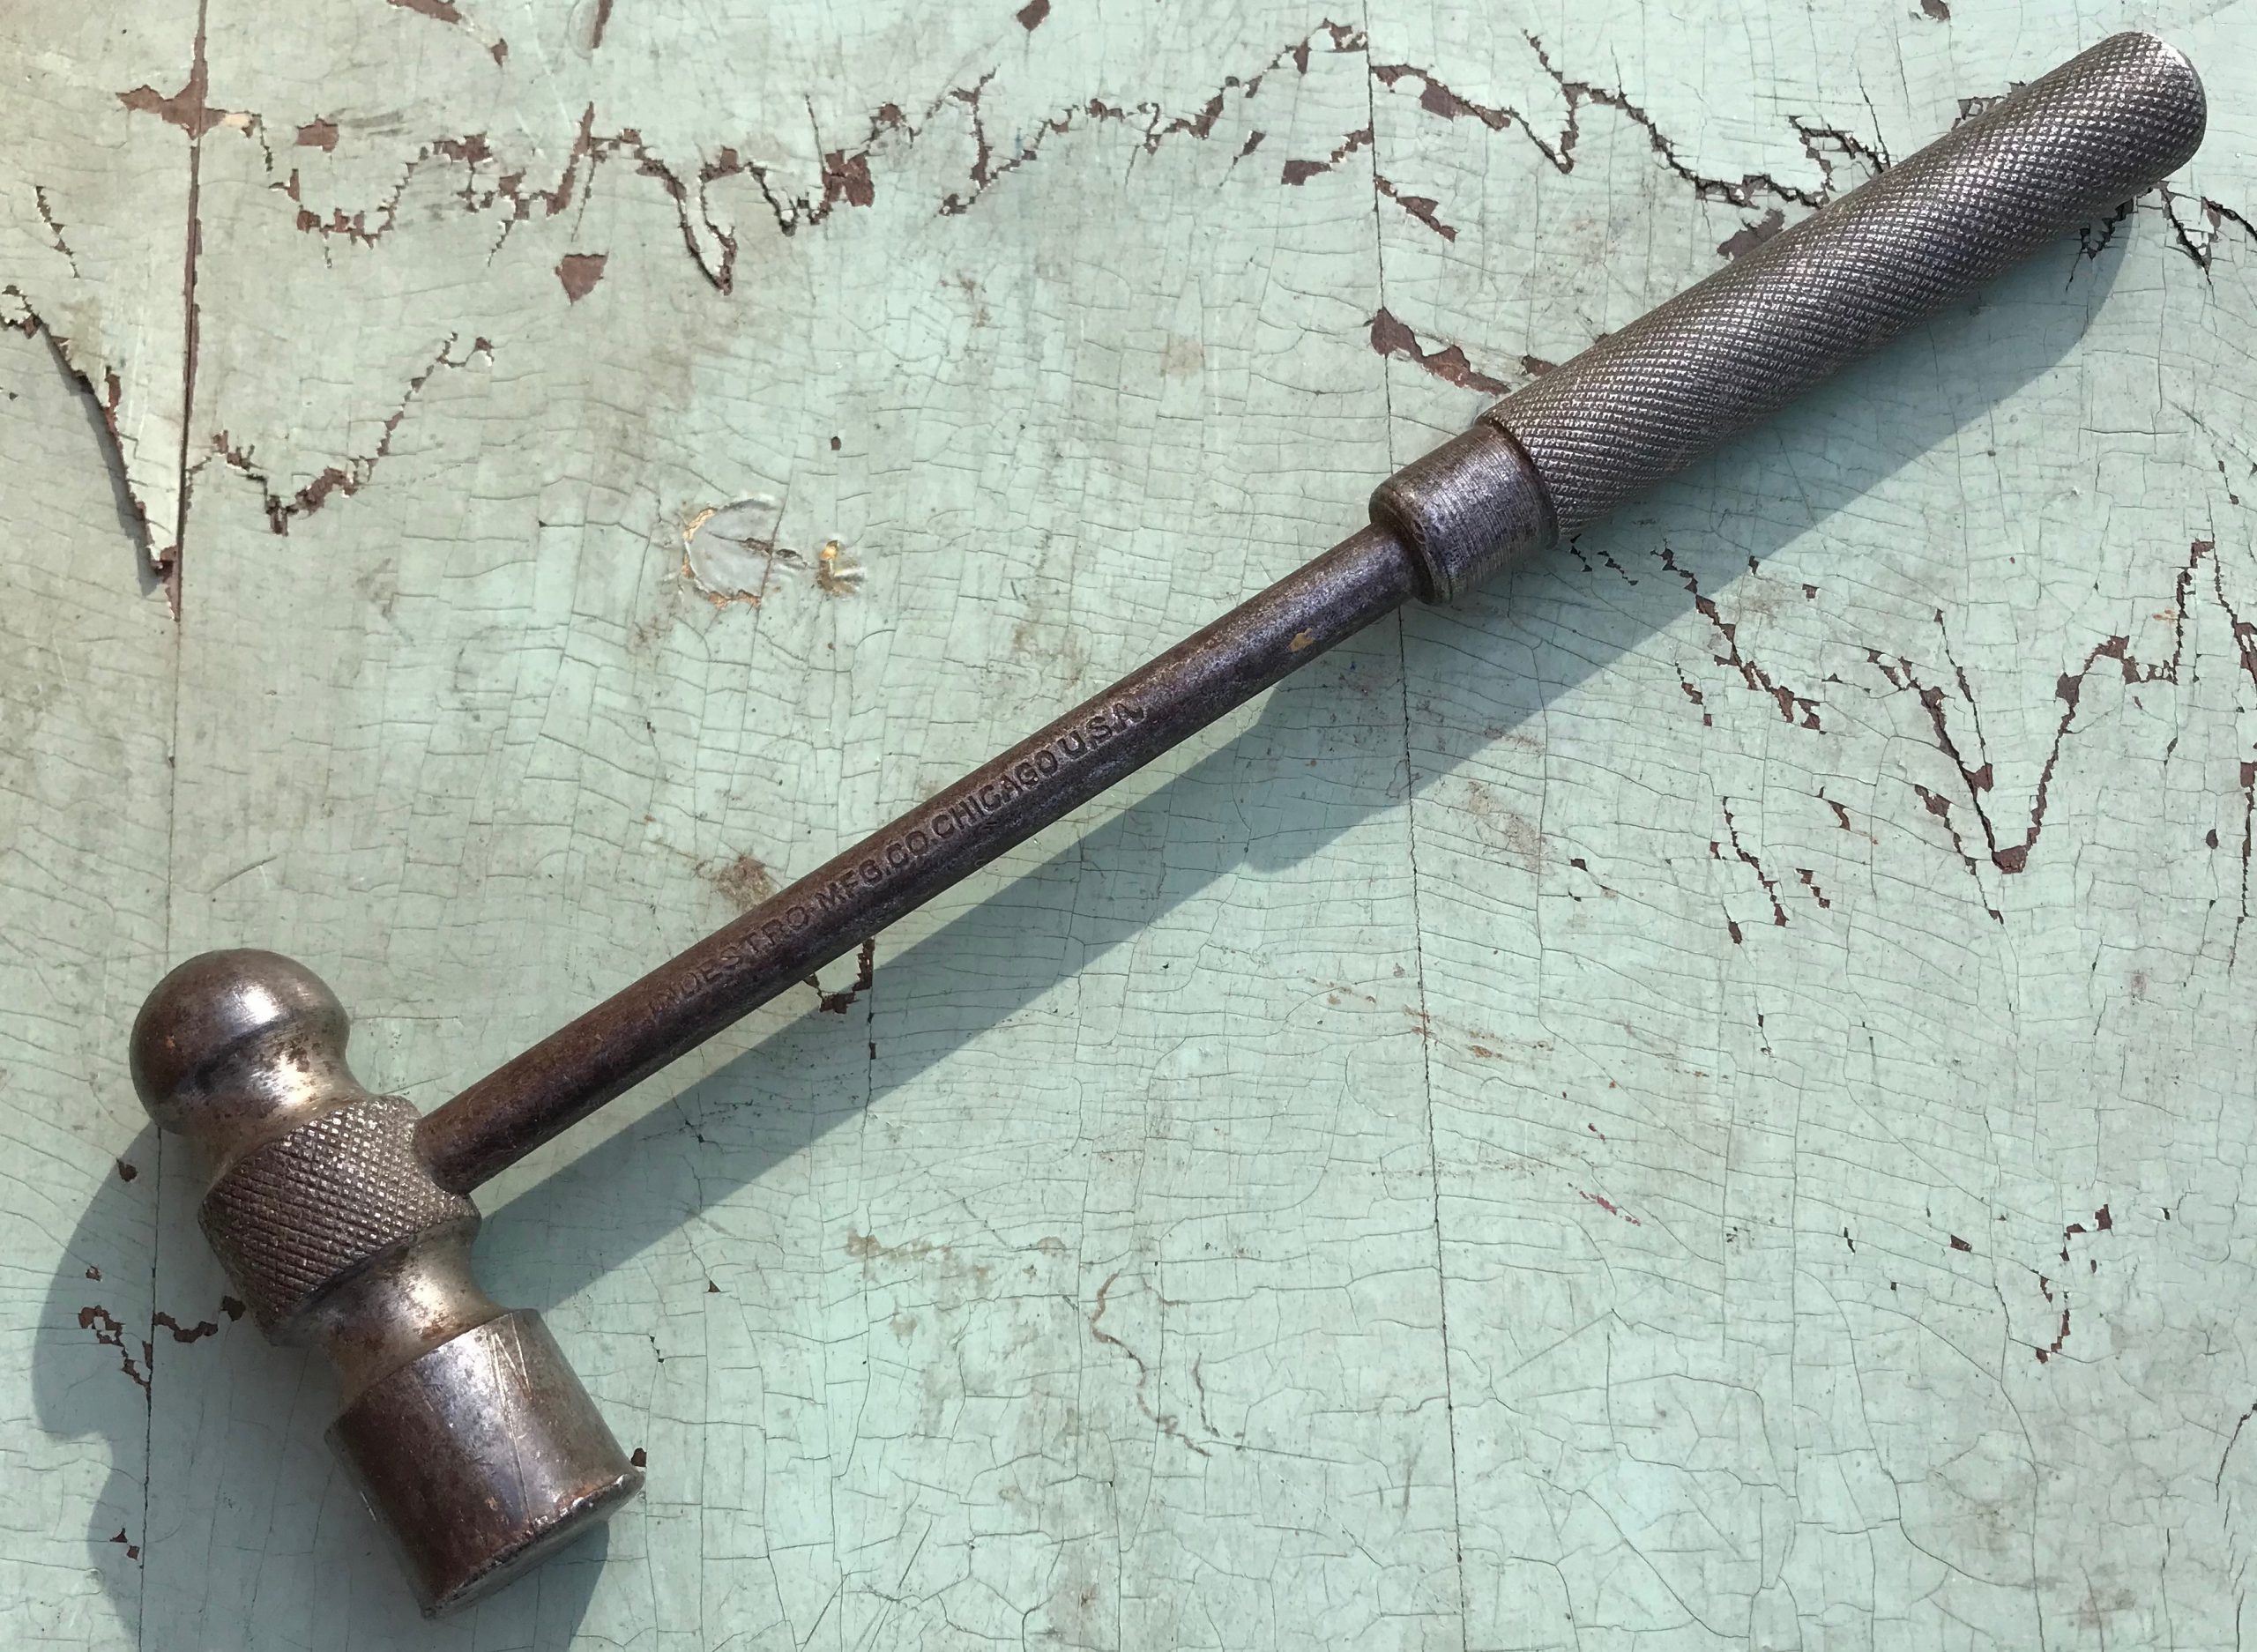 Steel Ball-Peen Machinist’s Hammer by Indestro MFG Co., c. 1930s